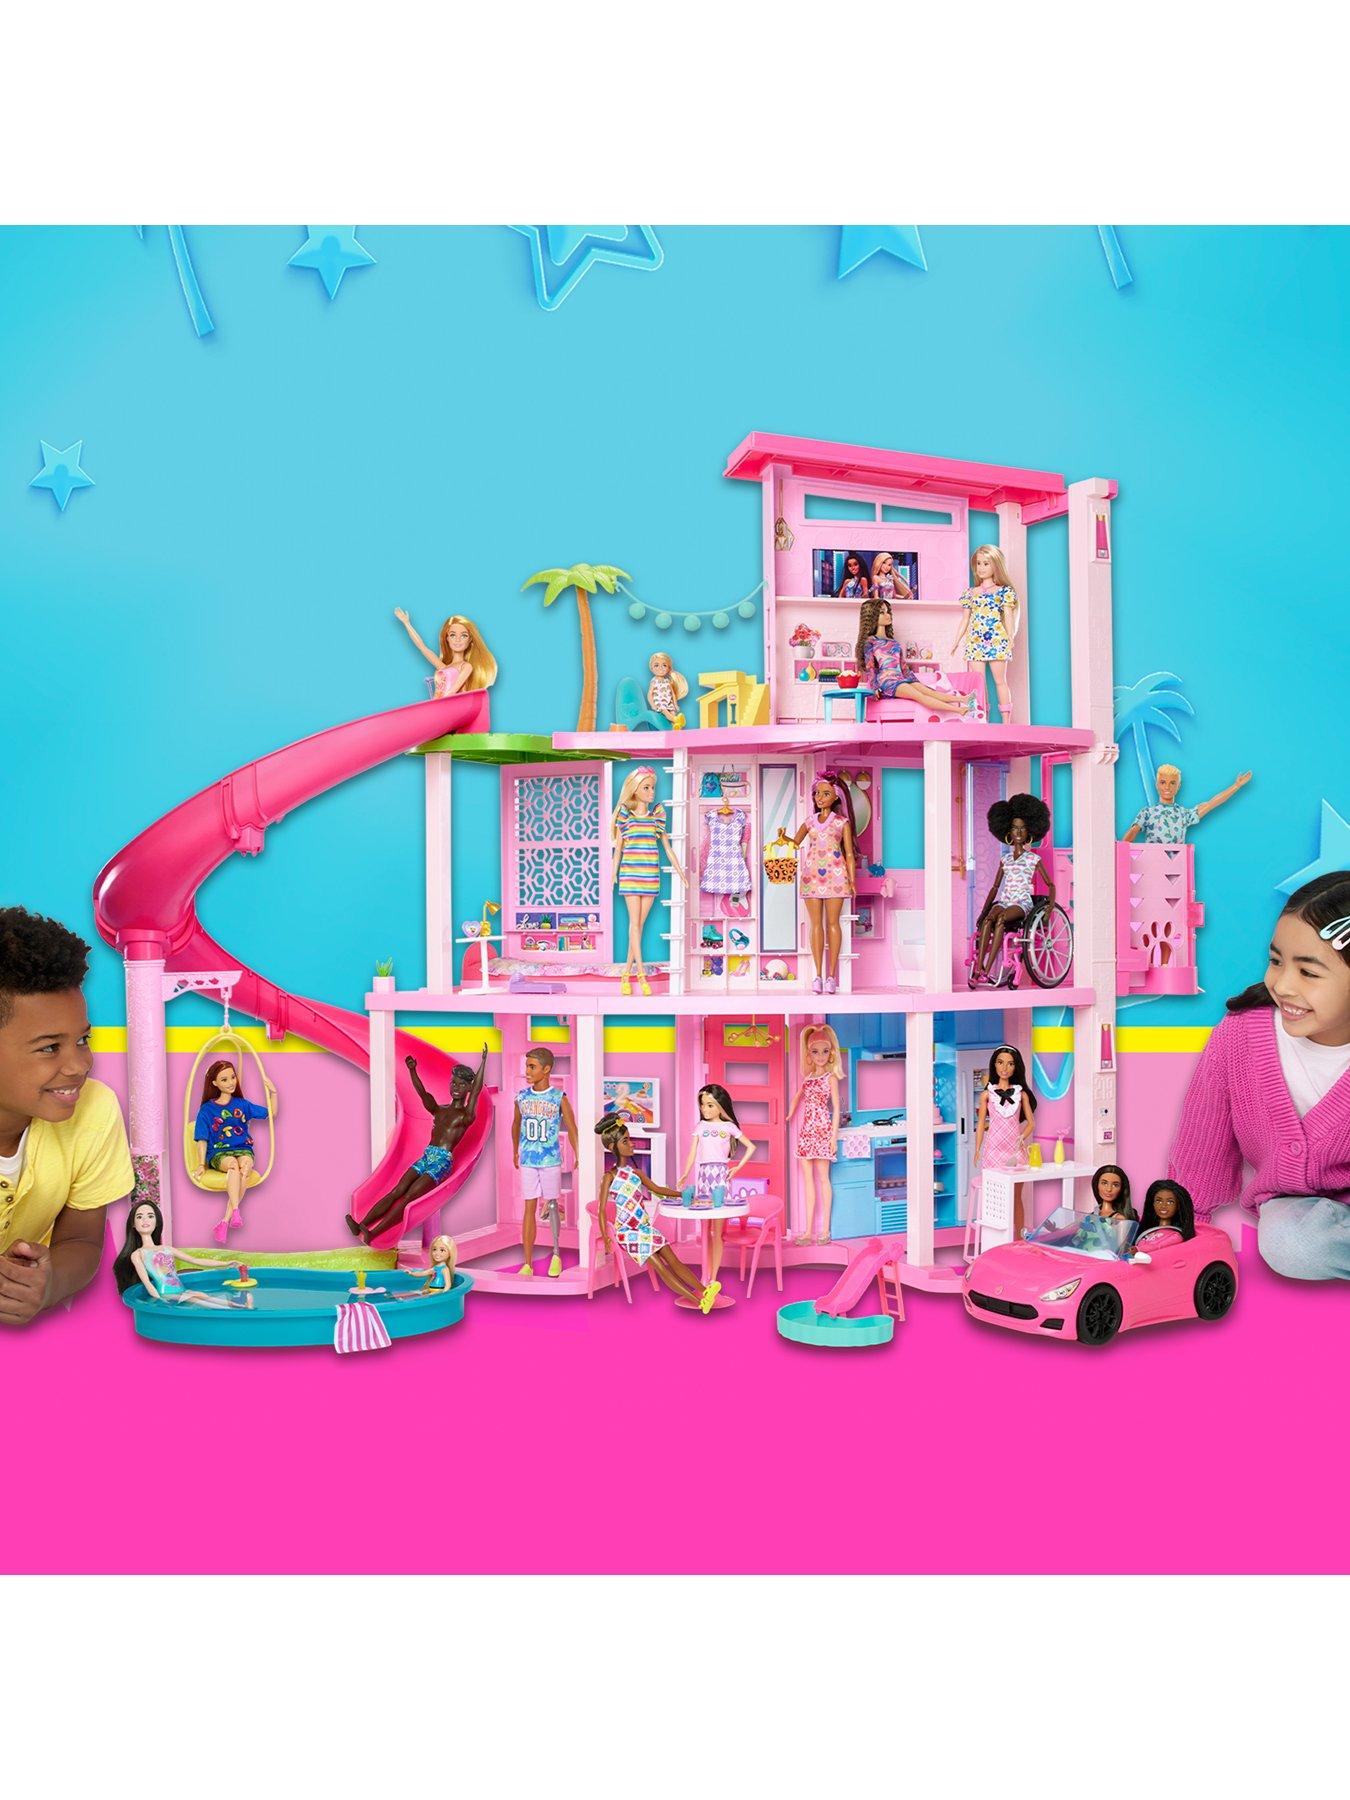 Barbie Arts And Crafts Suprise Positivity Box Birthday Present BRAND NEW